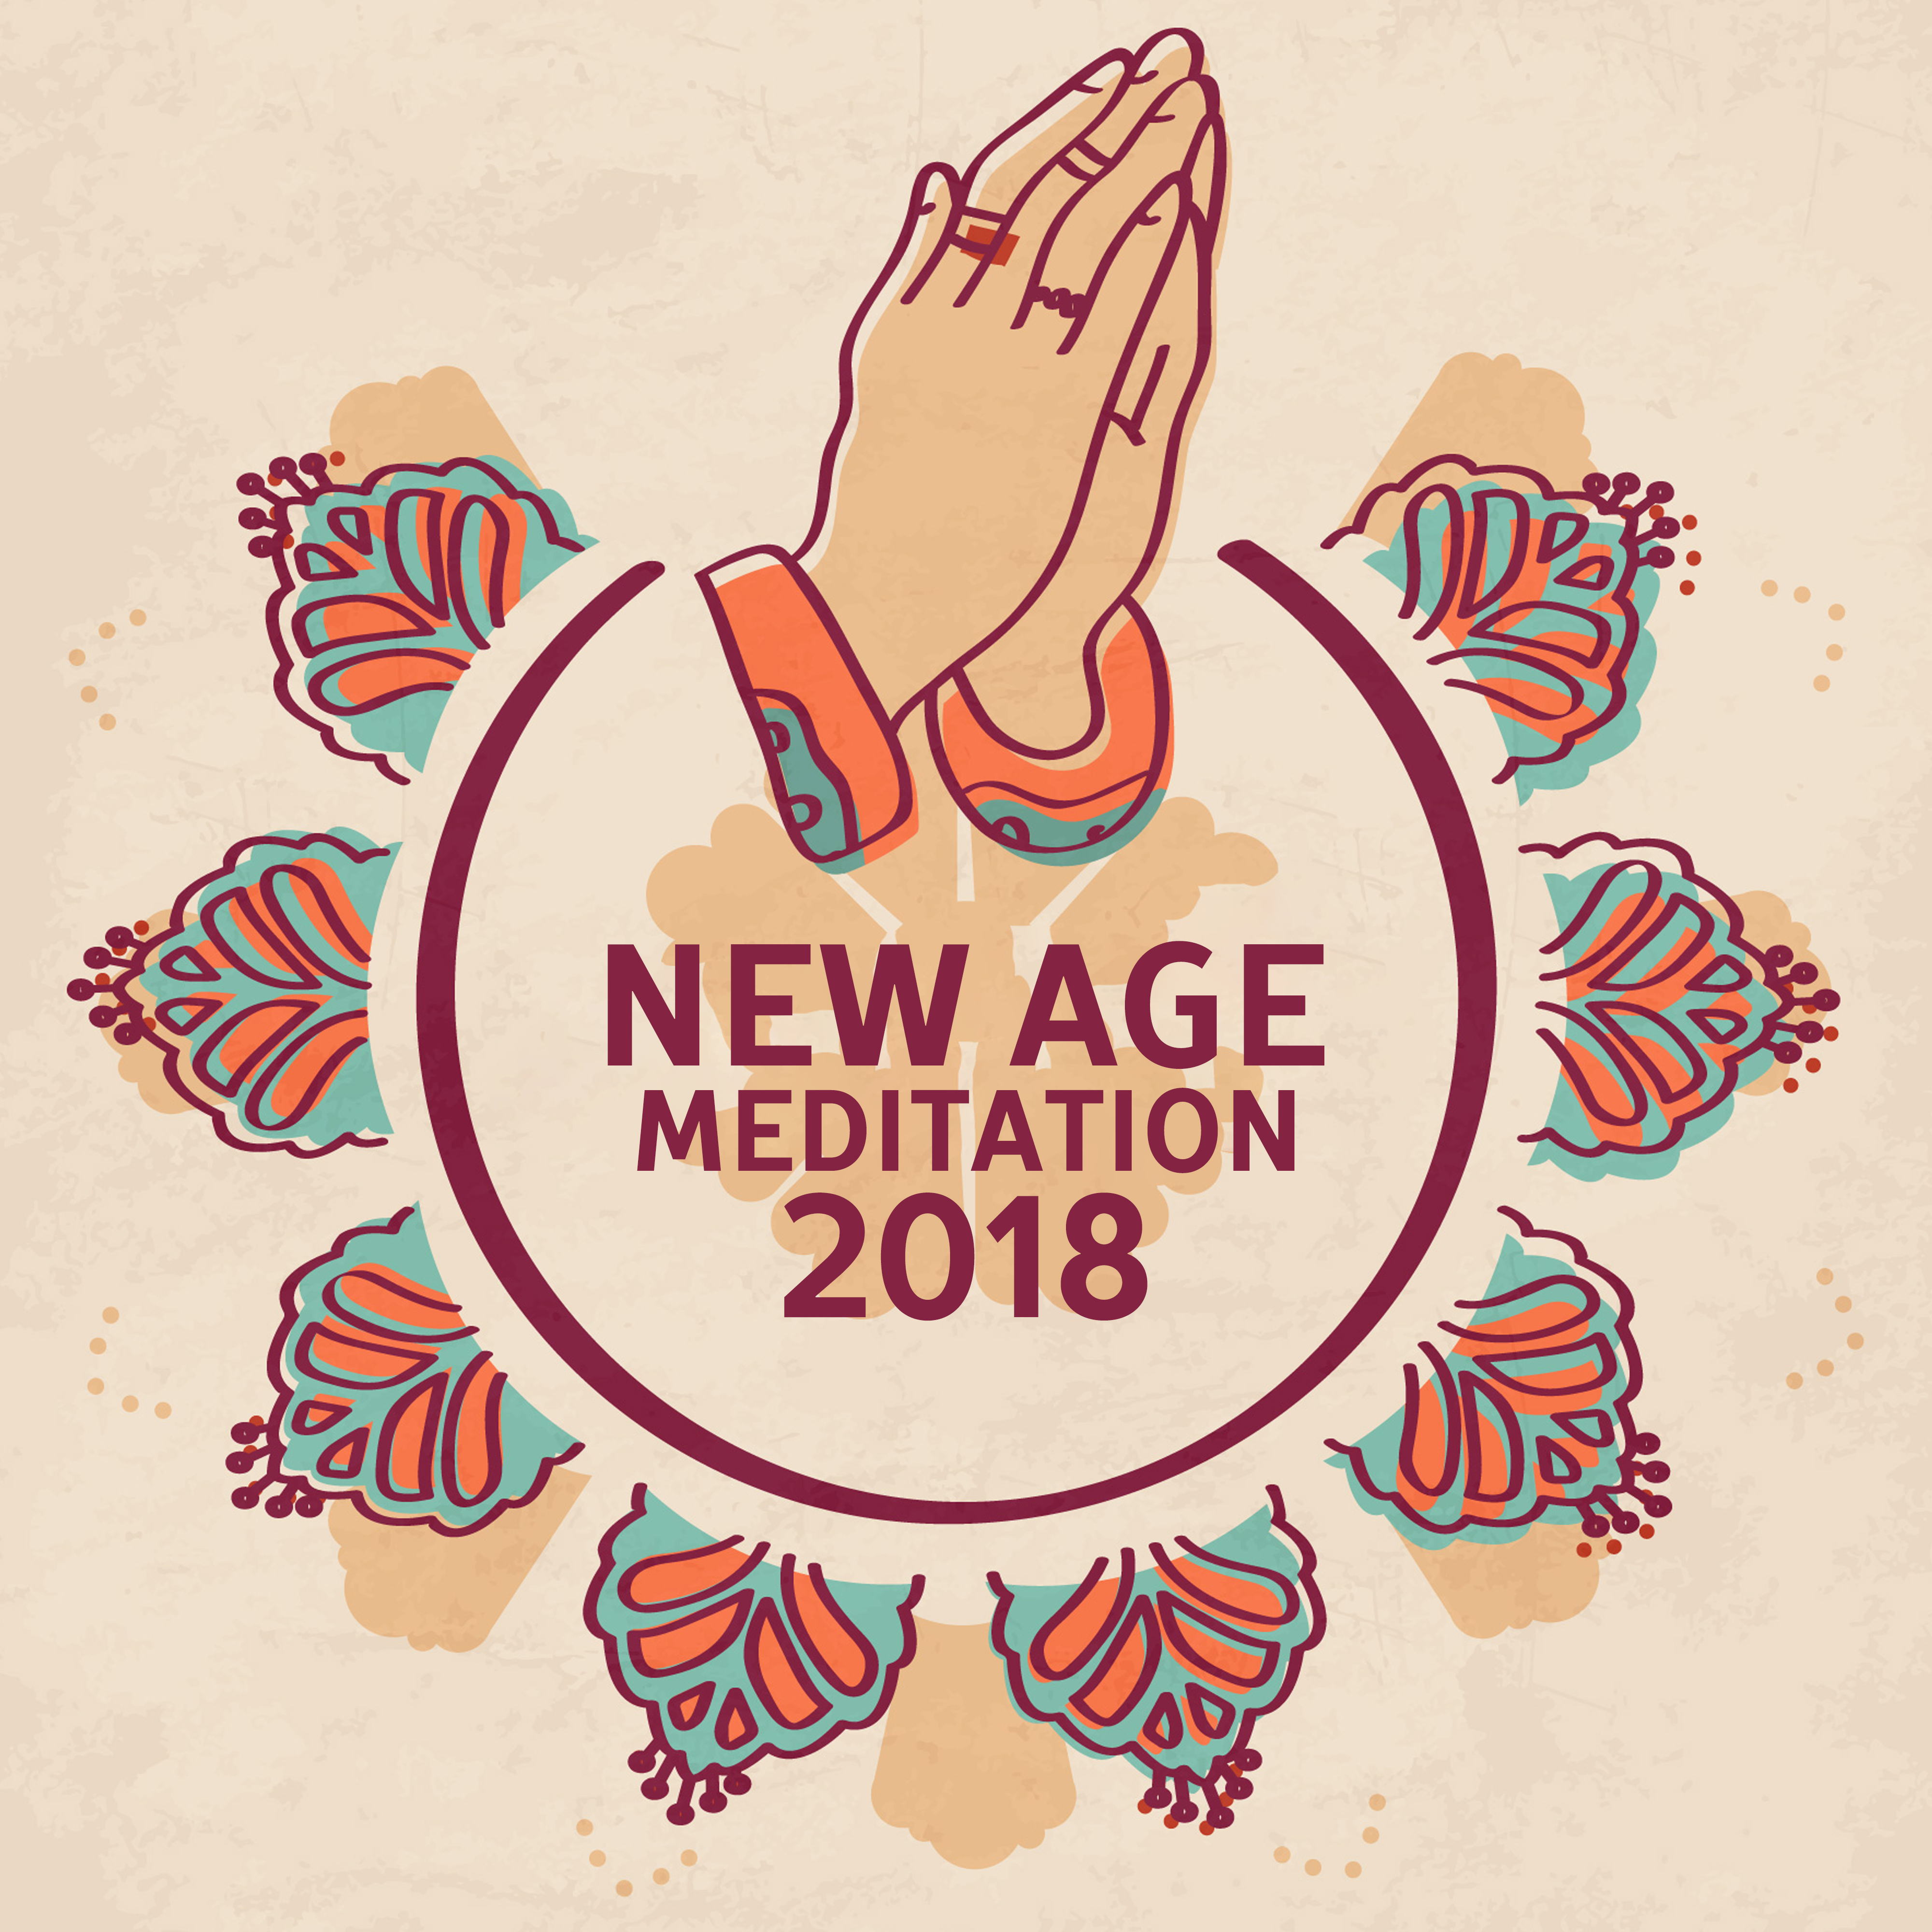 New Age Meditation 2018